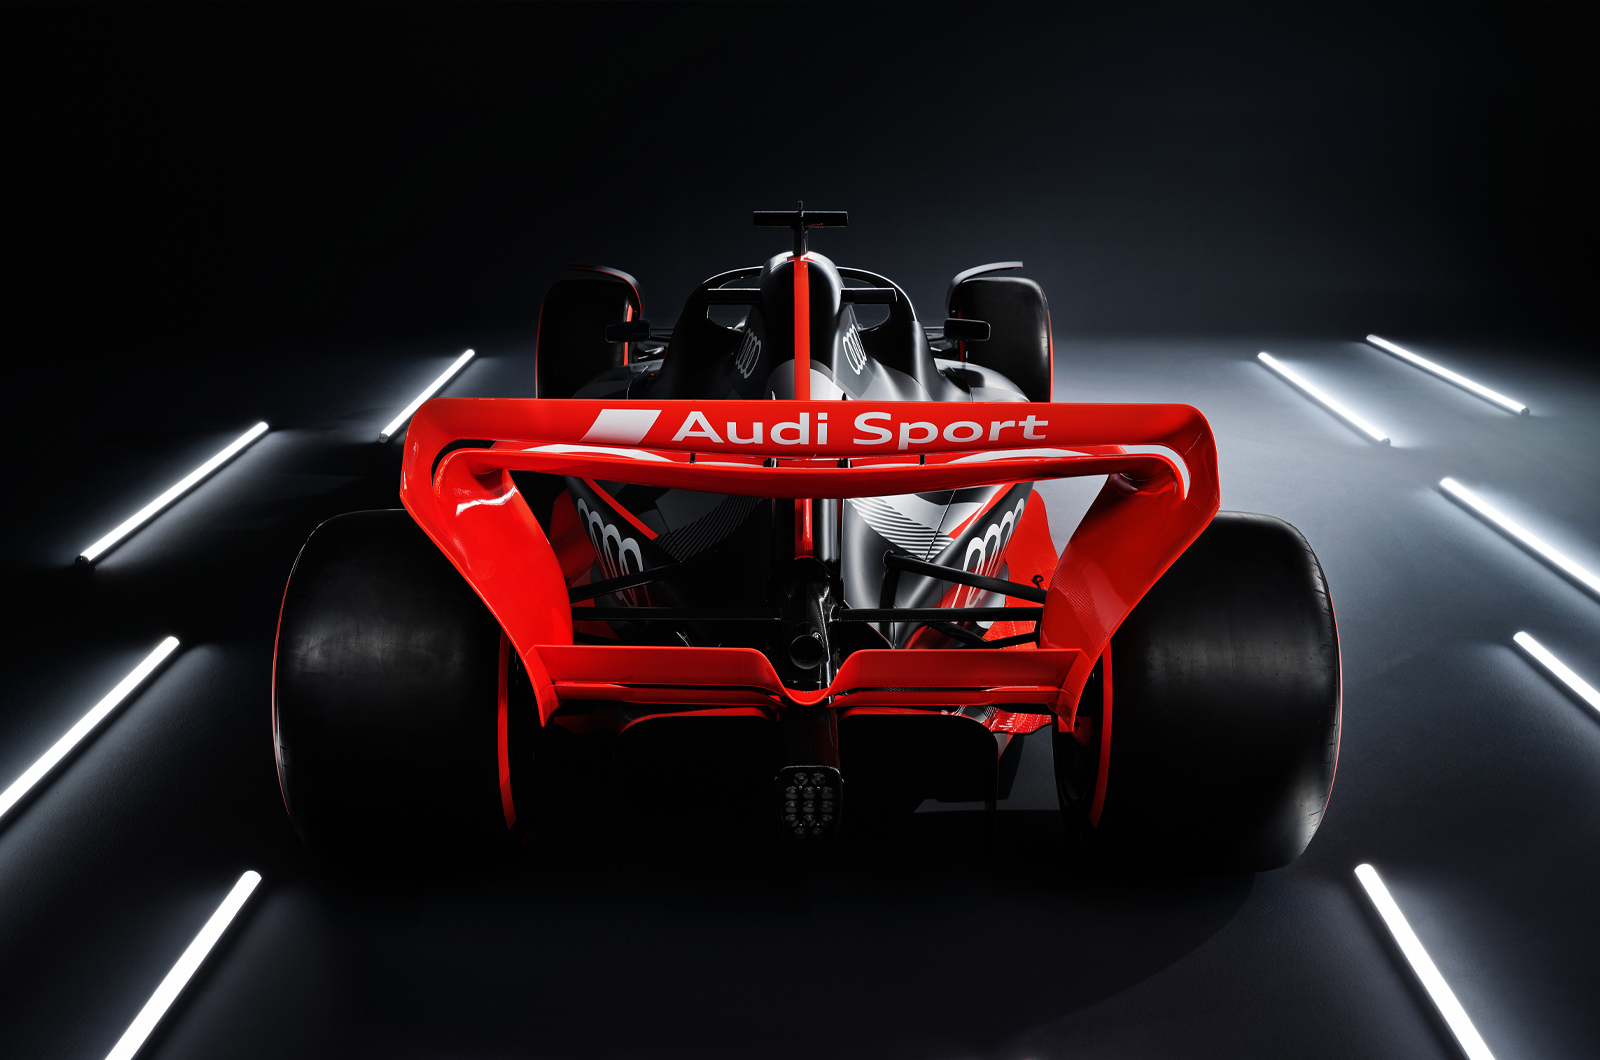 Audi's F1 plans detailed